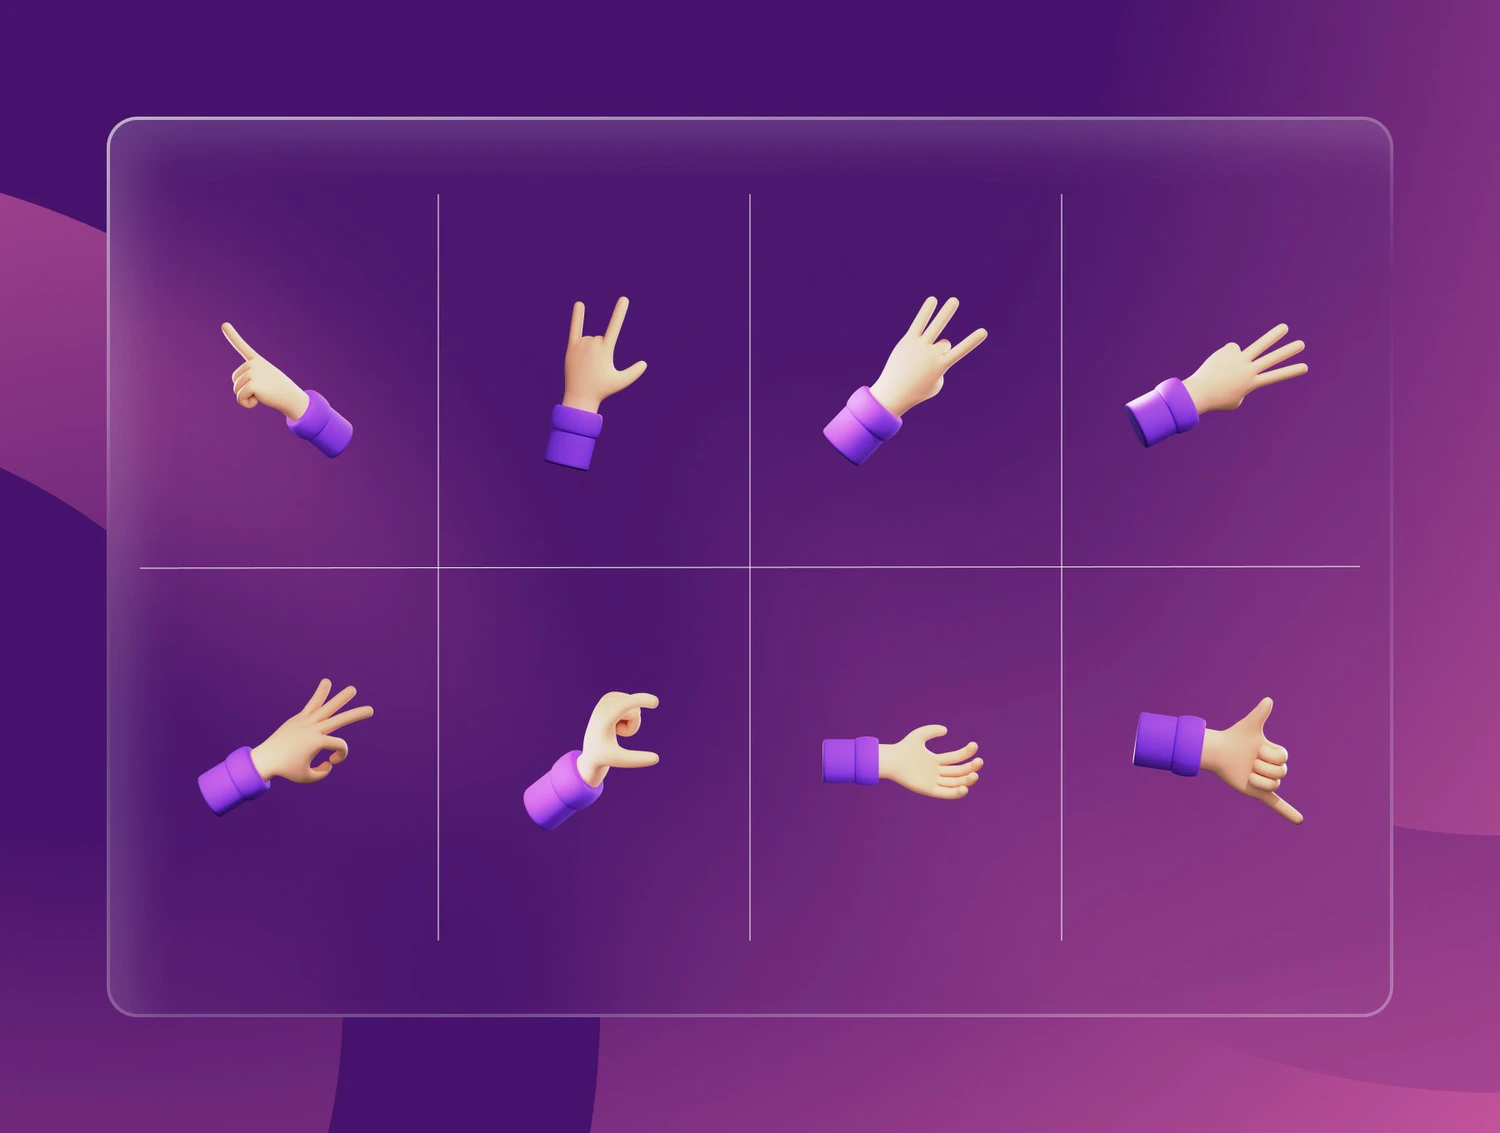 4282 16款女性卡通手势PNG免抠Blend模型素材 3D Hand Gesture Illustration Pack@GOOODME.COM